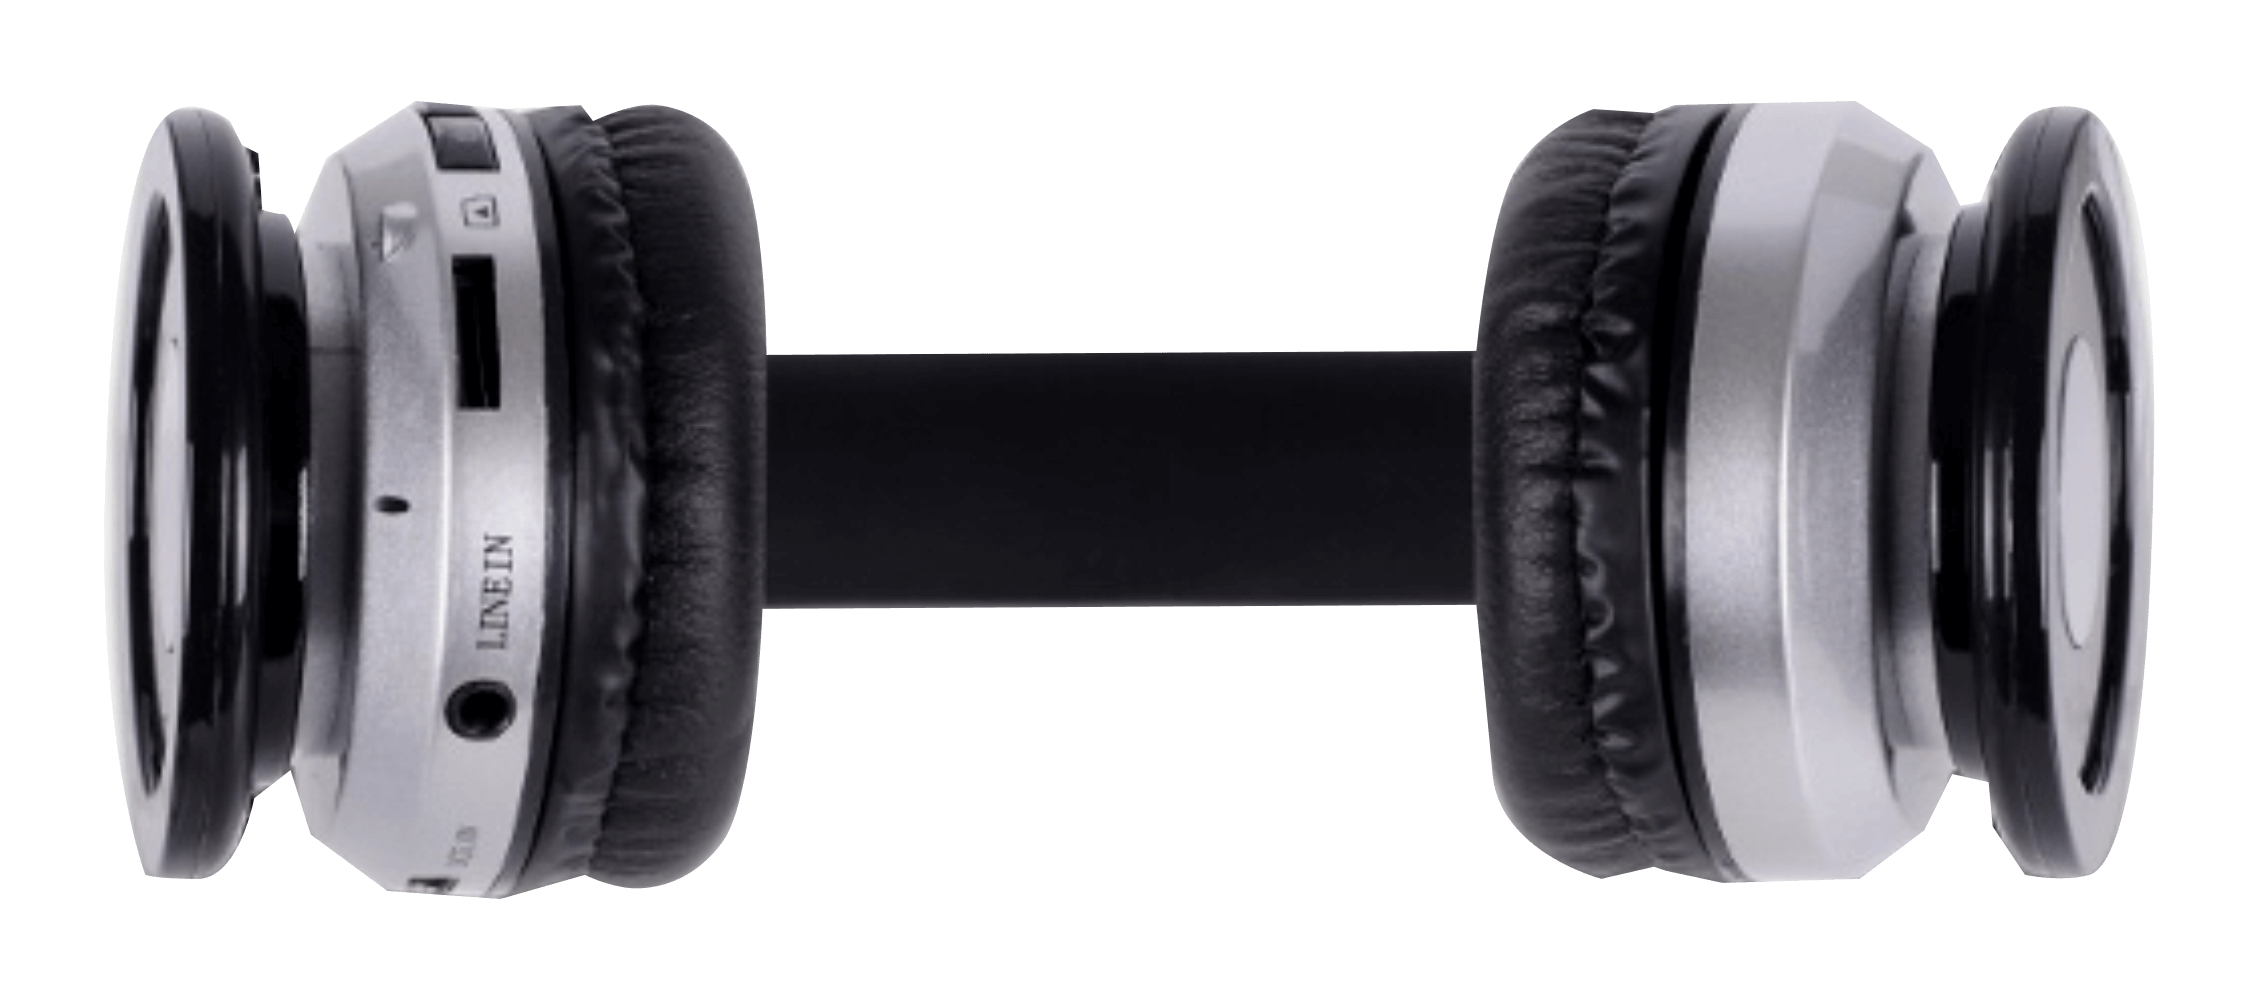 LG K8 2017 bluetooth fejhallgató Rebeltec Crystal fekete